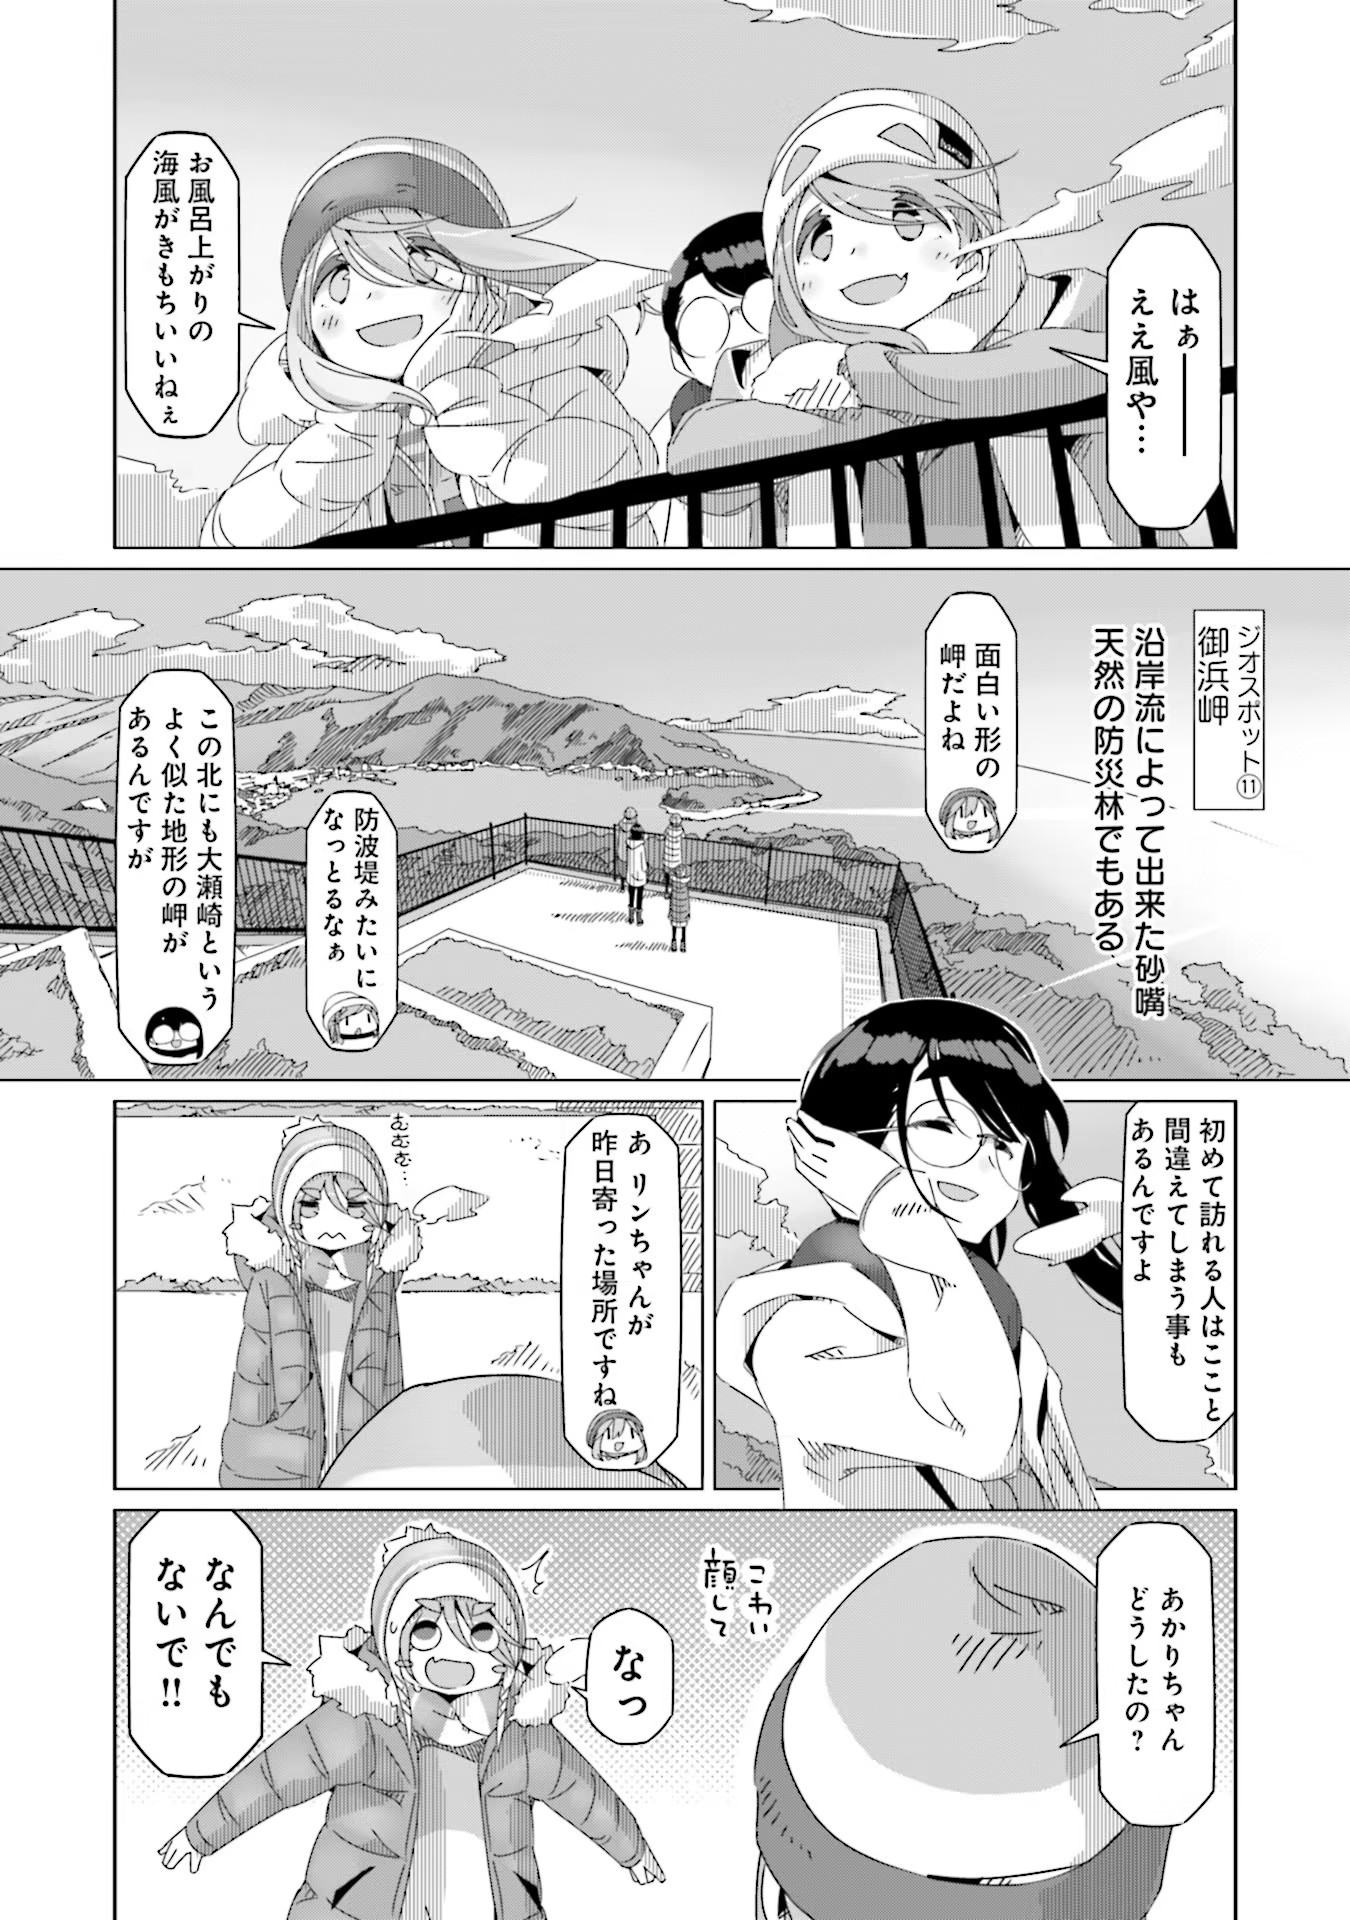 Yuru Camp - Chapter 50 - Page 2